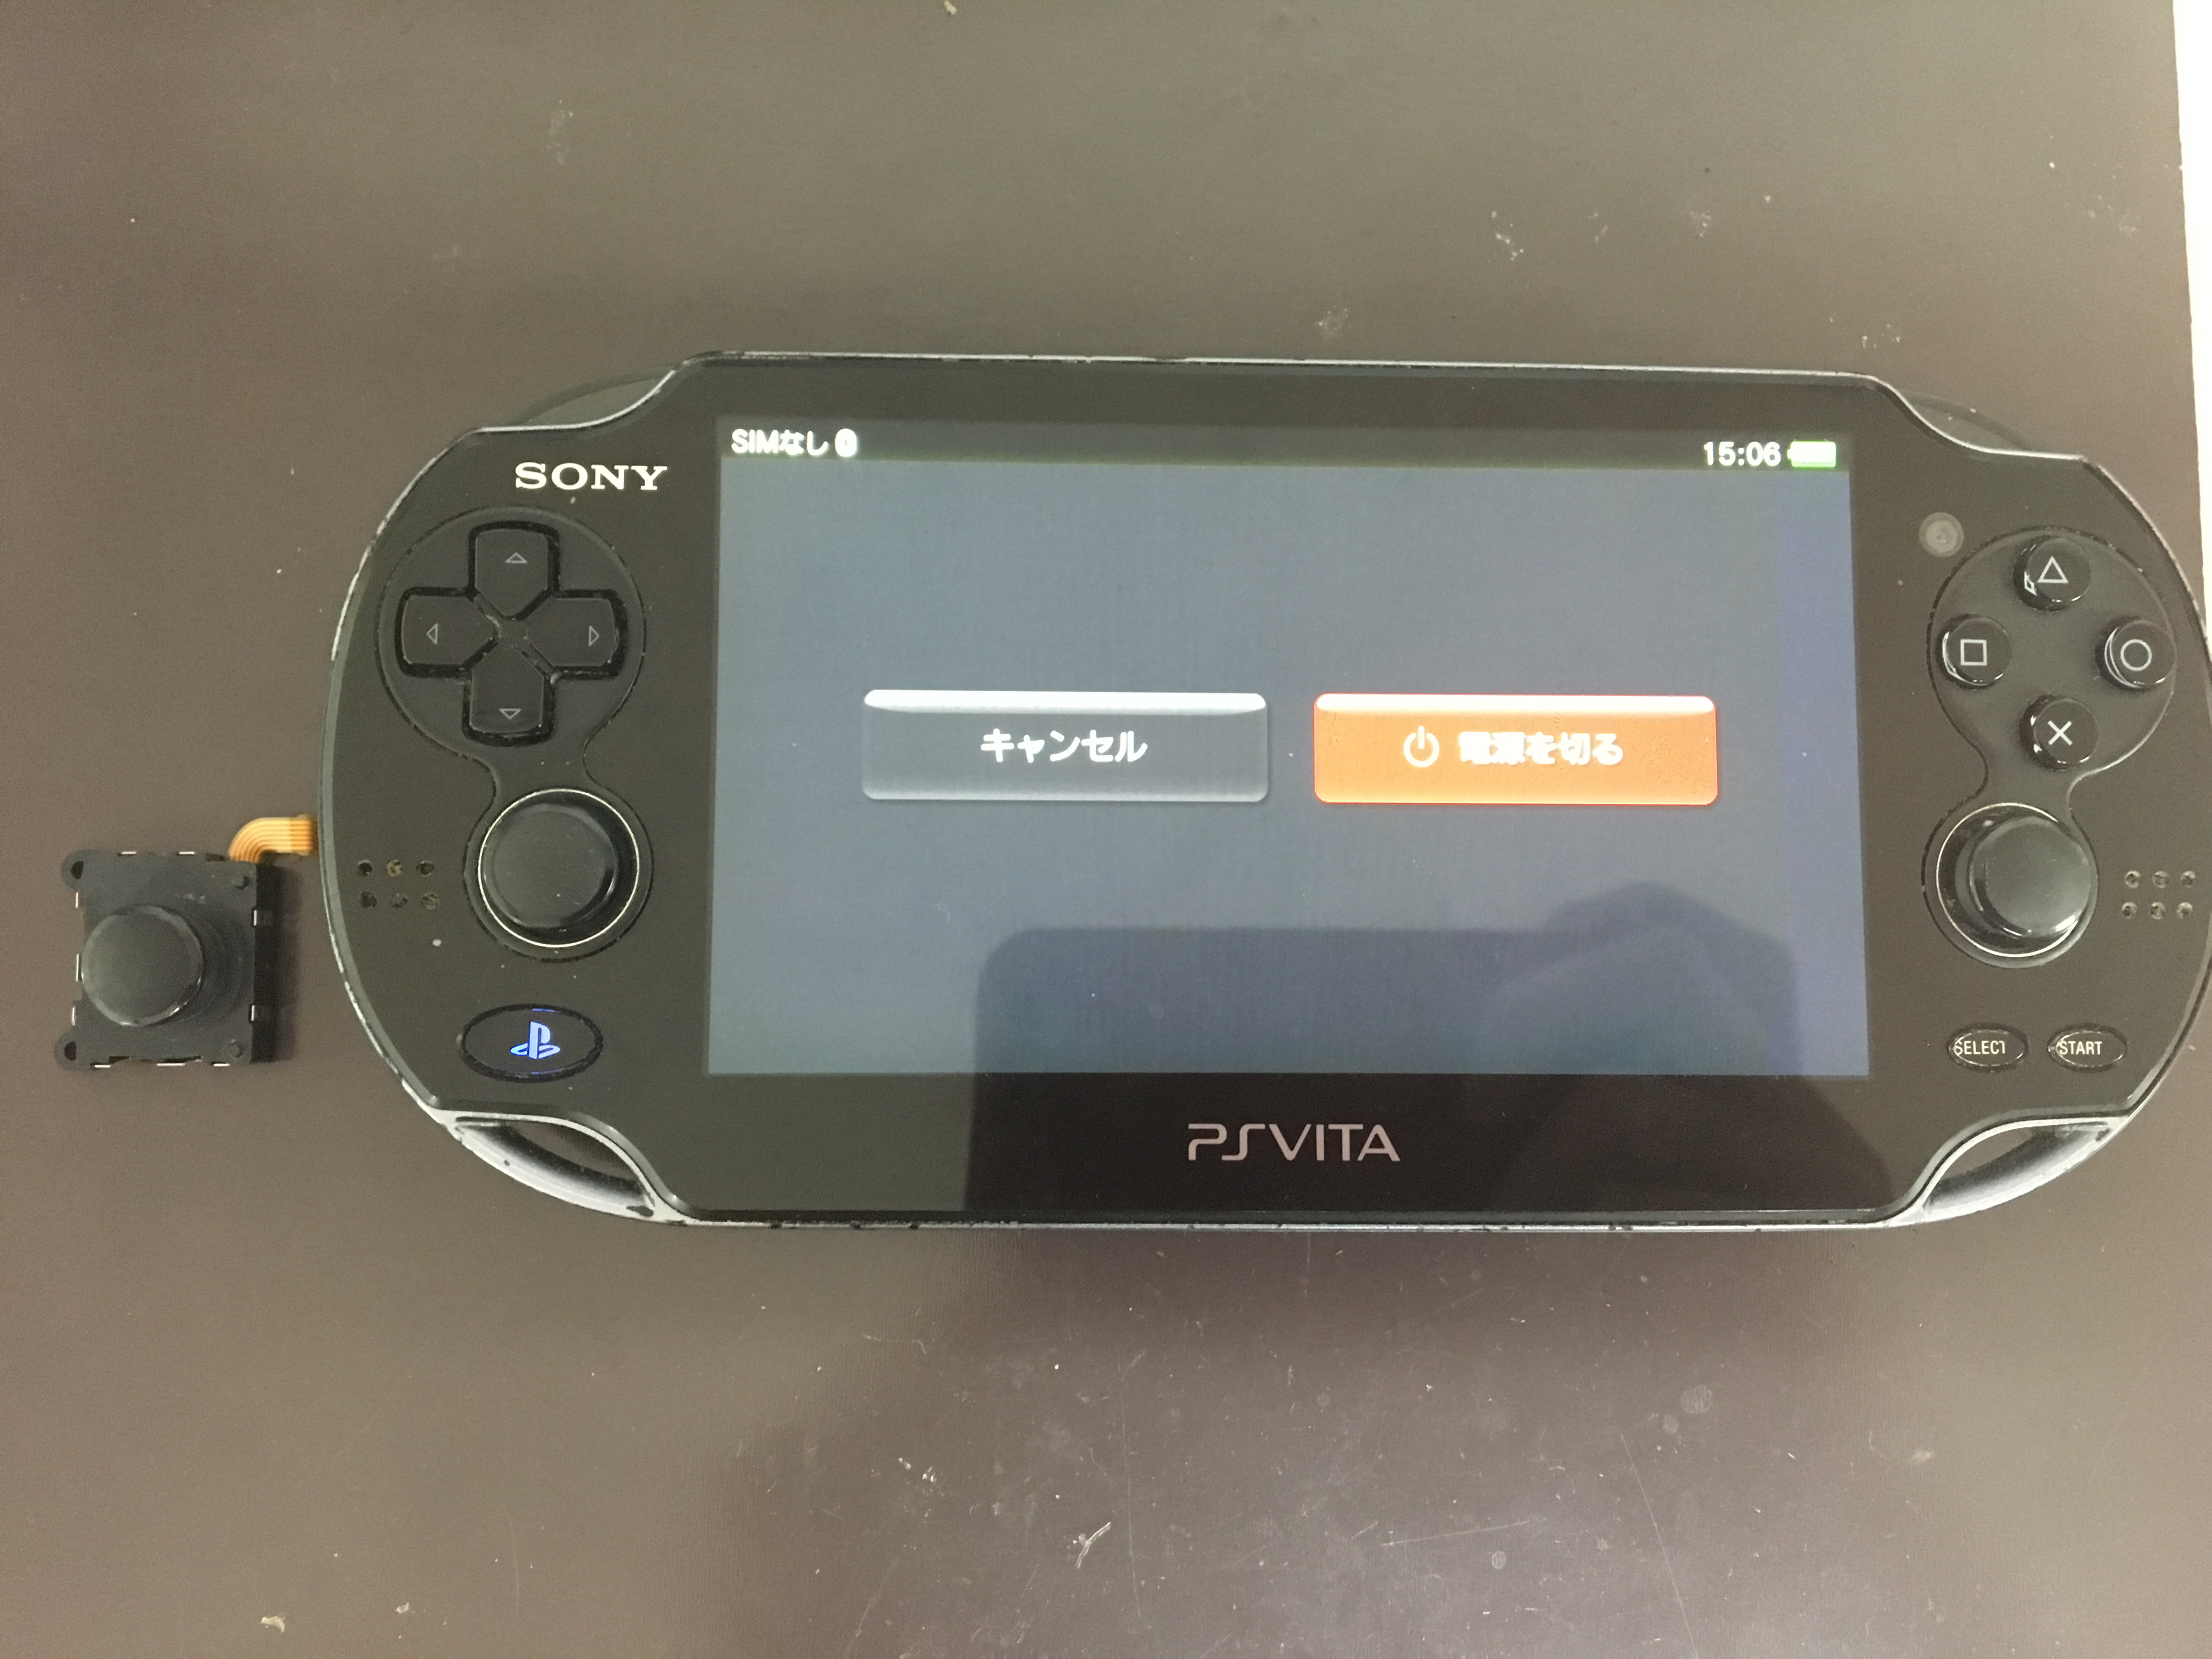 PSVITA1000の左アナログスティックが効かないとPSVITA左アナログスティック交換修理のご依頼をいただきました！ |  Switch・Nintendo3DS ・ PSP 修理のゲームホスピタル |Switch Nintendo3DS(ニンテンドーDS) PSP 修理